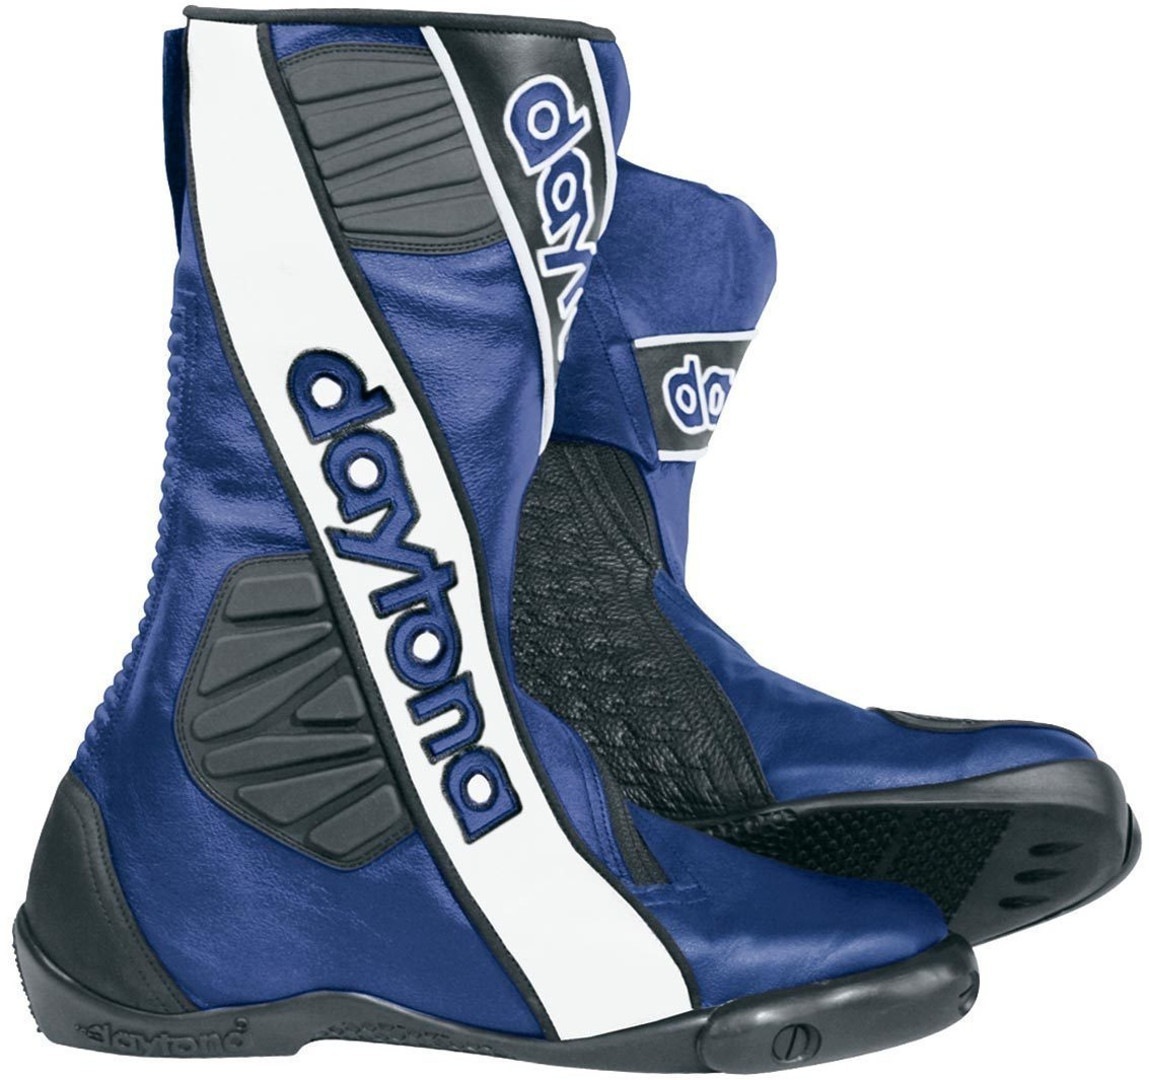 Daytona Security Evo G3 Motorcycle Boots, black-white-blue, Size 42, black-white-blue, Size 42